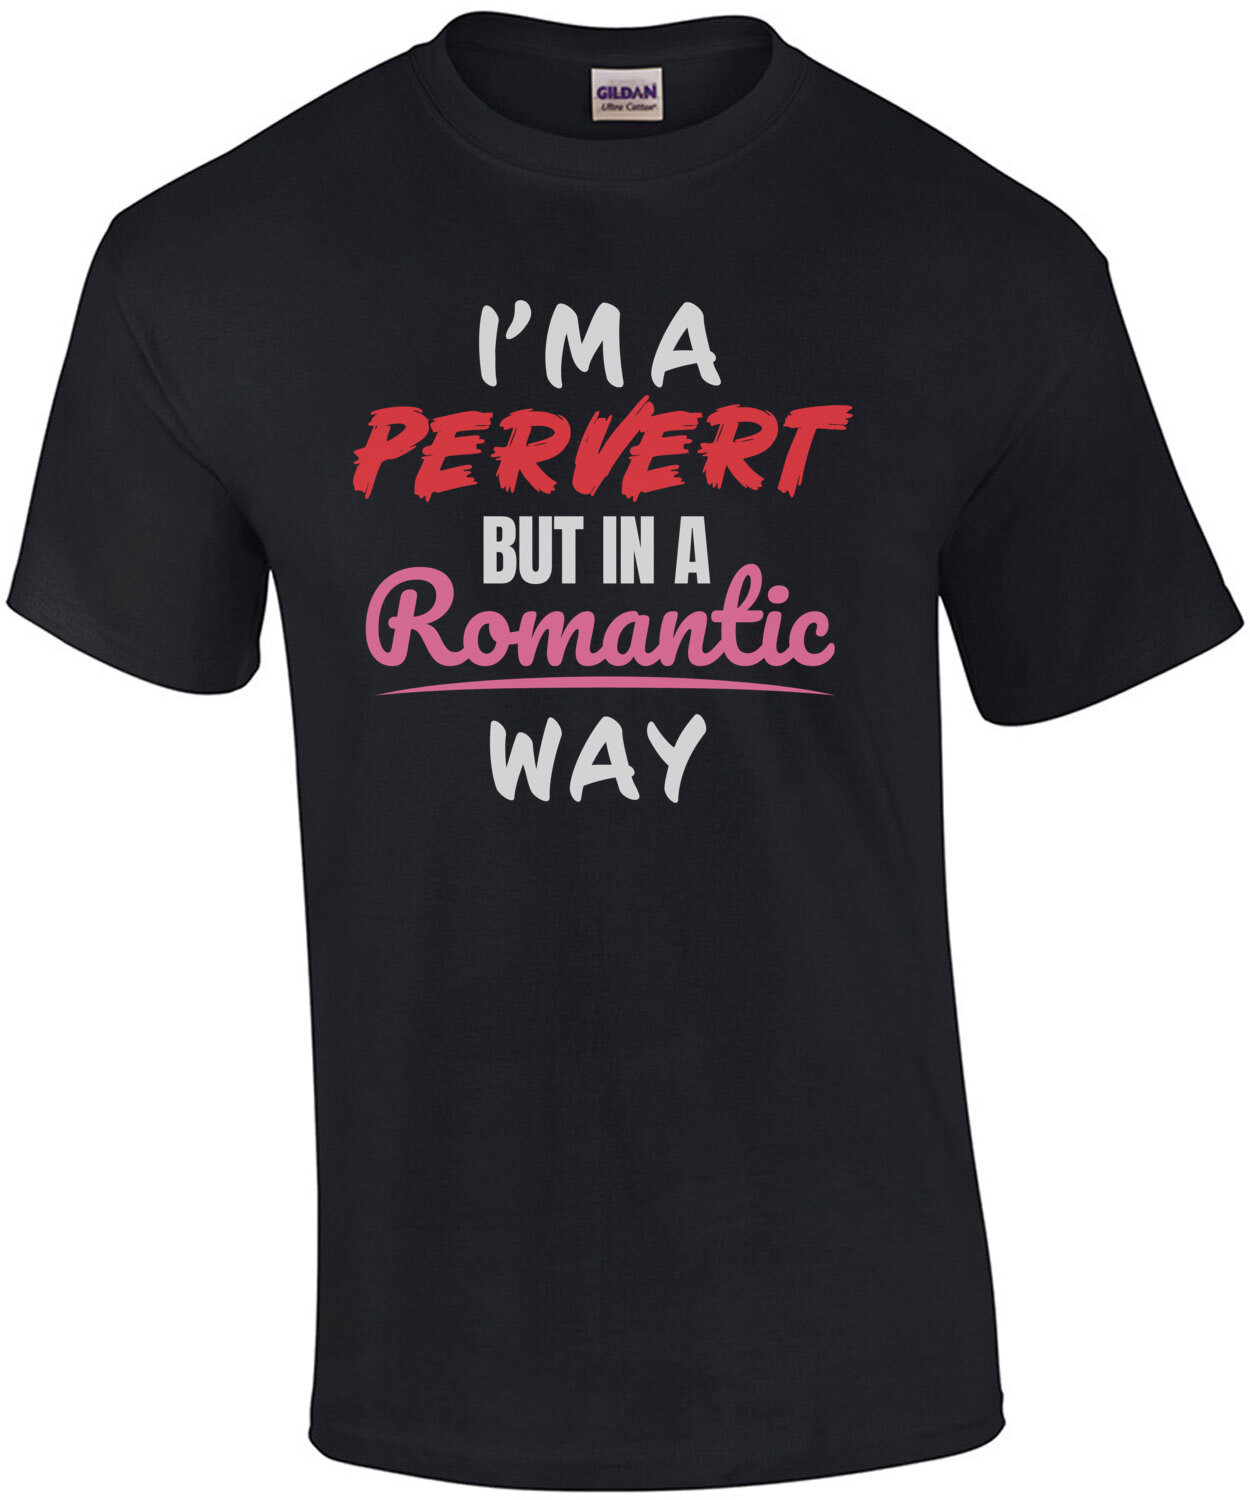 I'm a pervert but in a romantic way - funny t-shirt